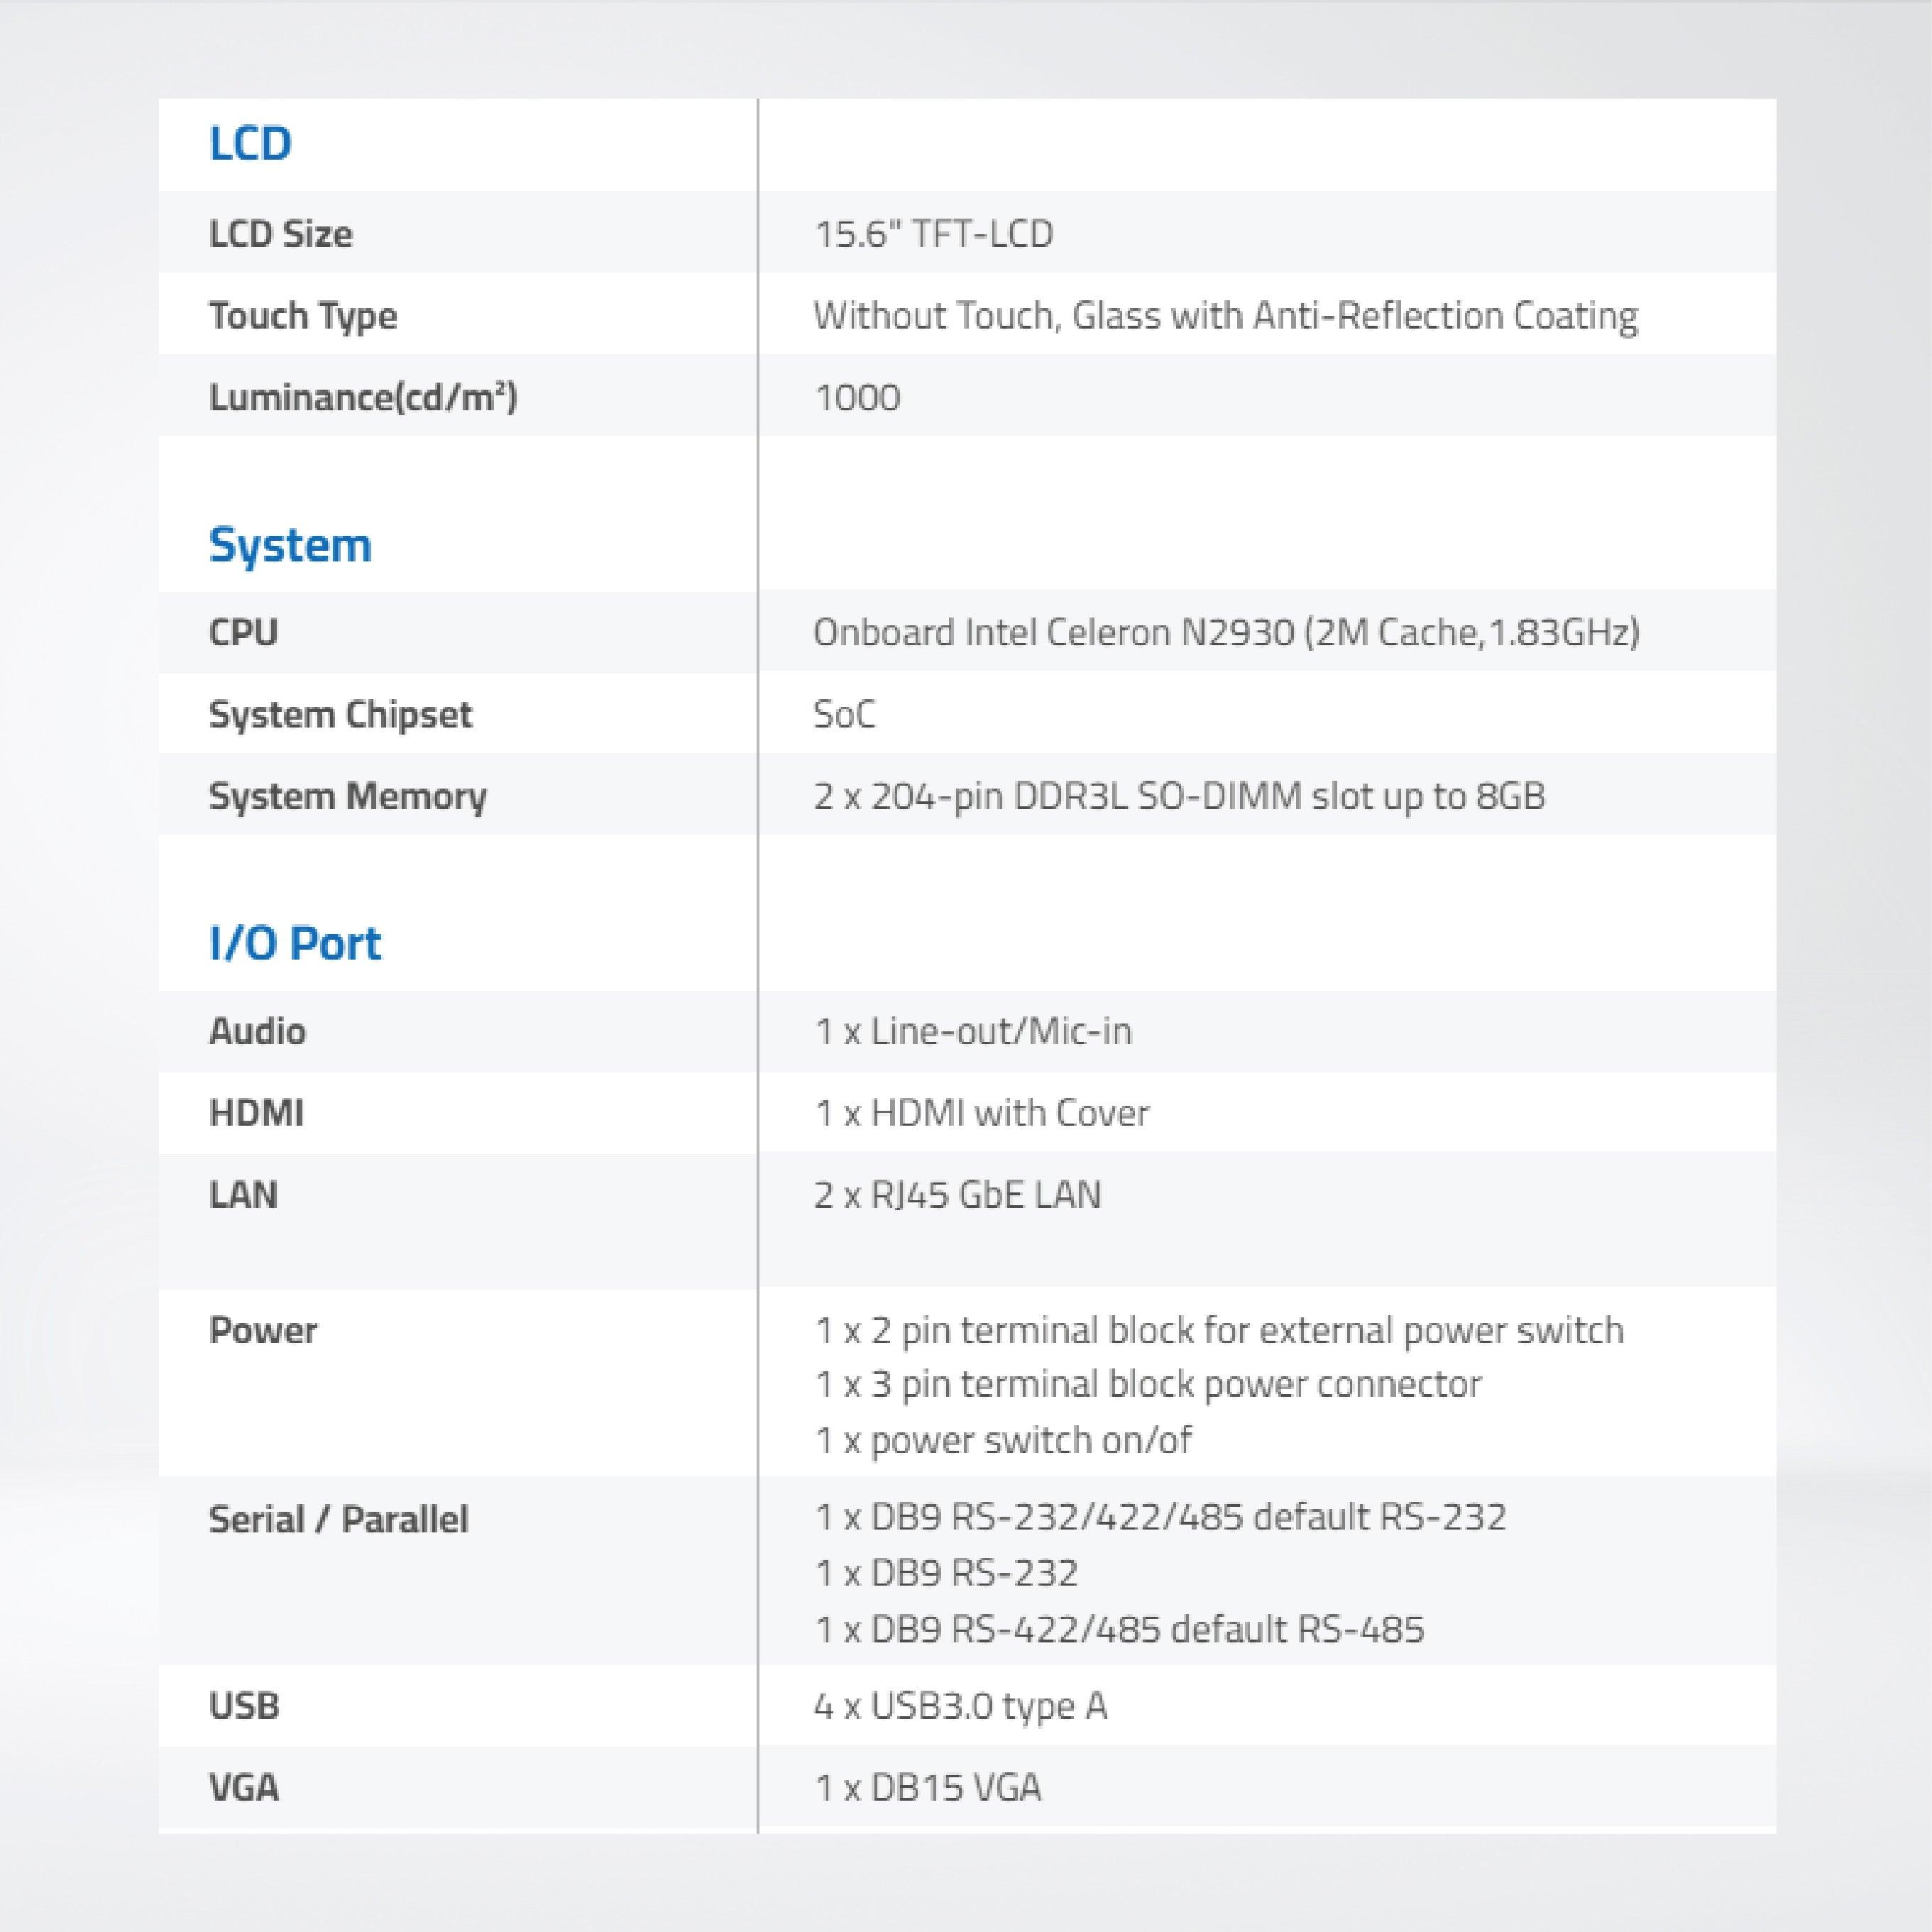 ViPAC-816GH 15.6” Intel Celeron N2930 Fanless Expandable Panel PC - Riverplus